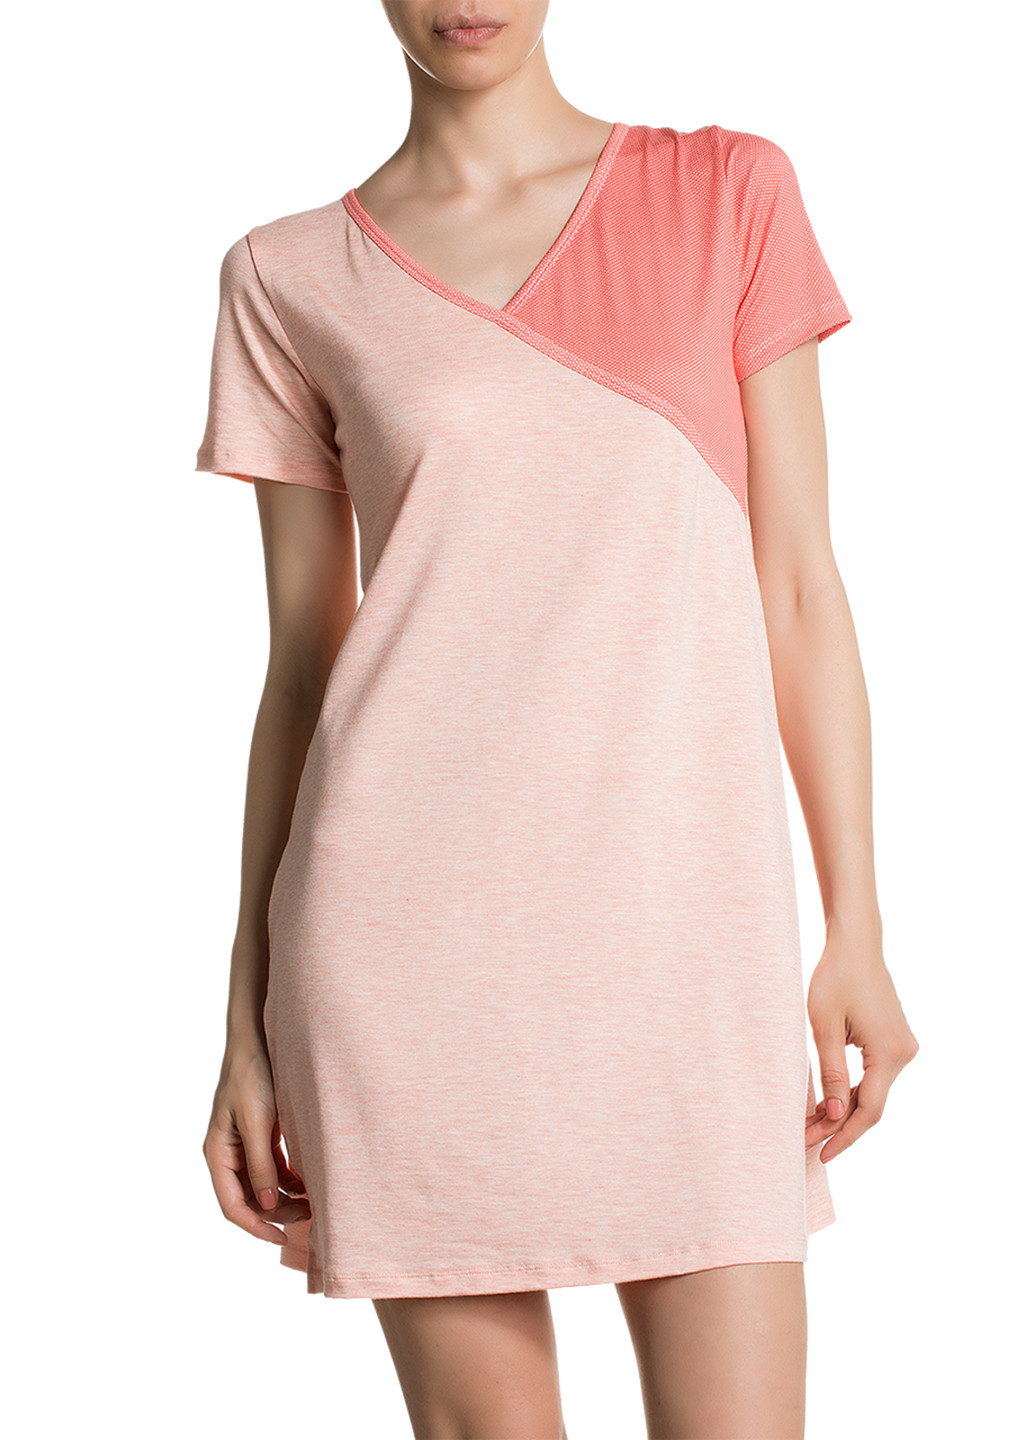 Ночная рубашка DoReMi меланж персиковая домашняя хлопок